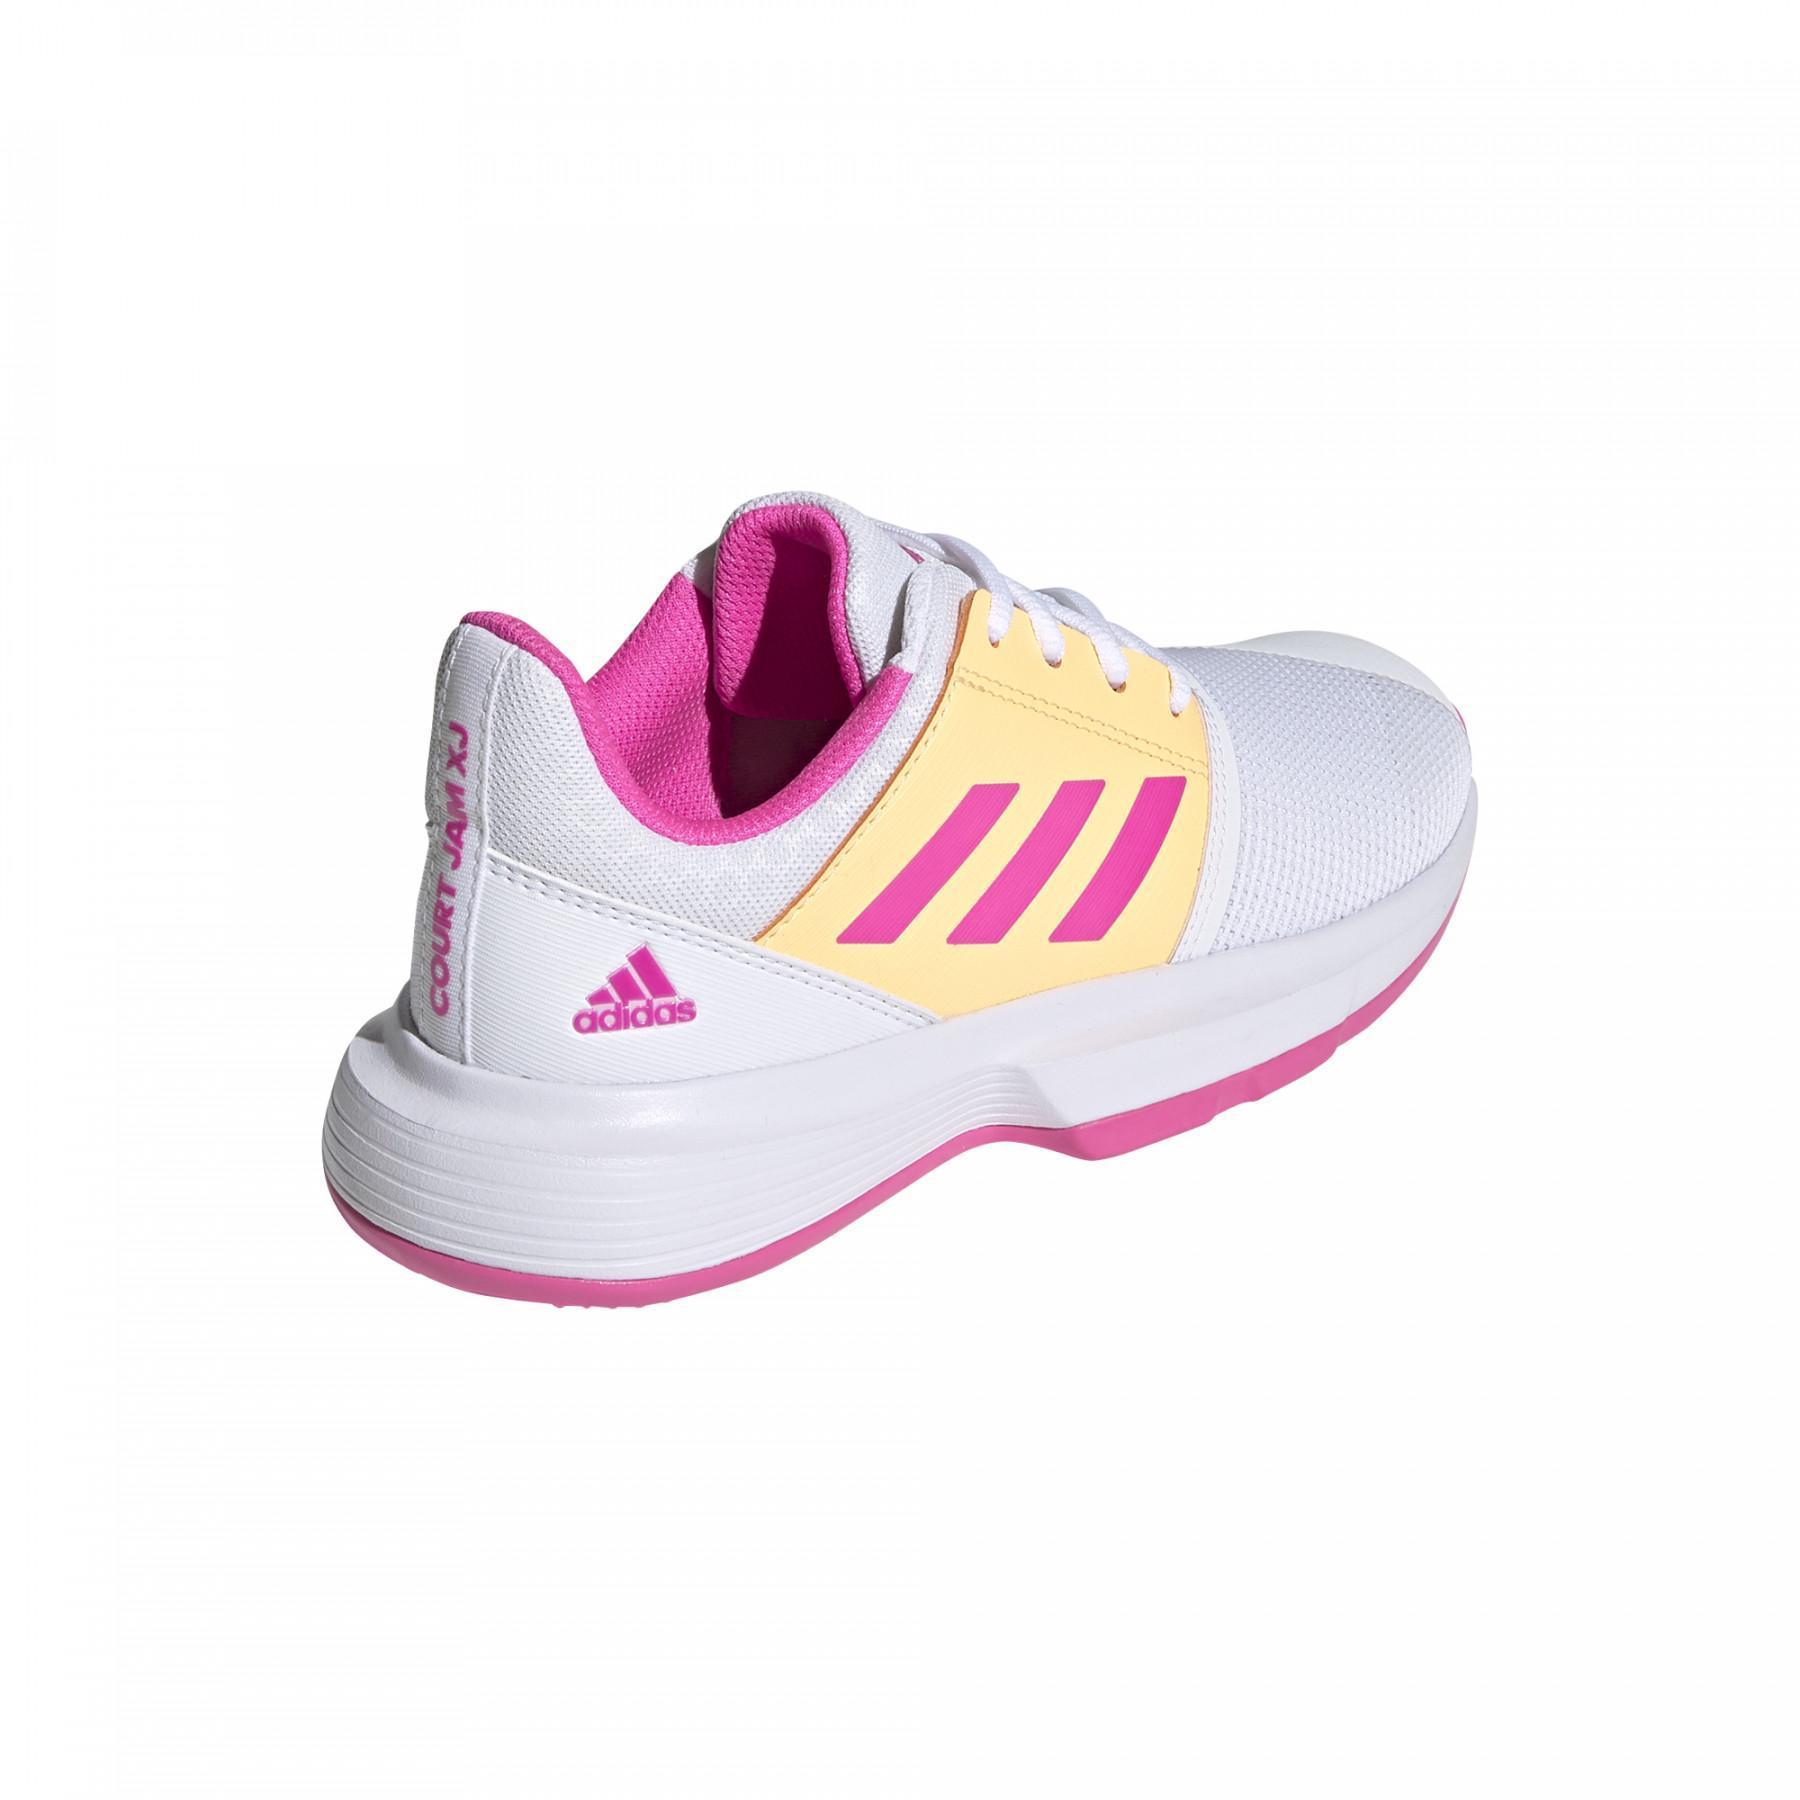 Children's shoes adidas CourtJam Tennis